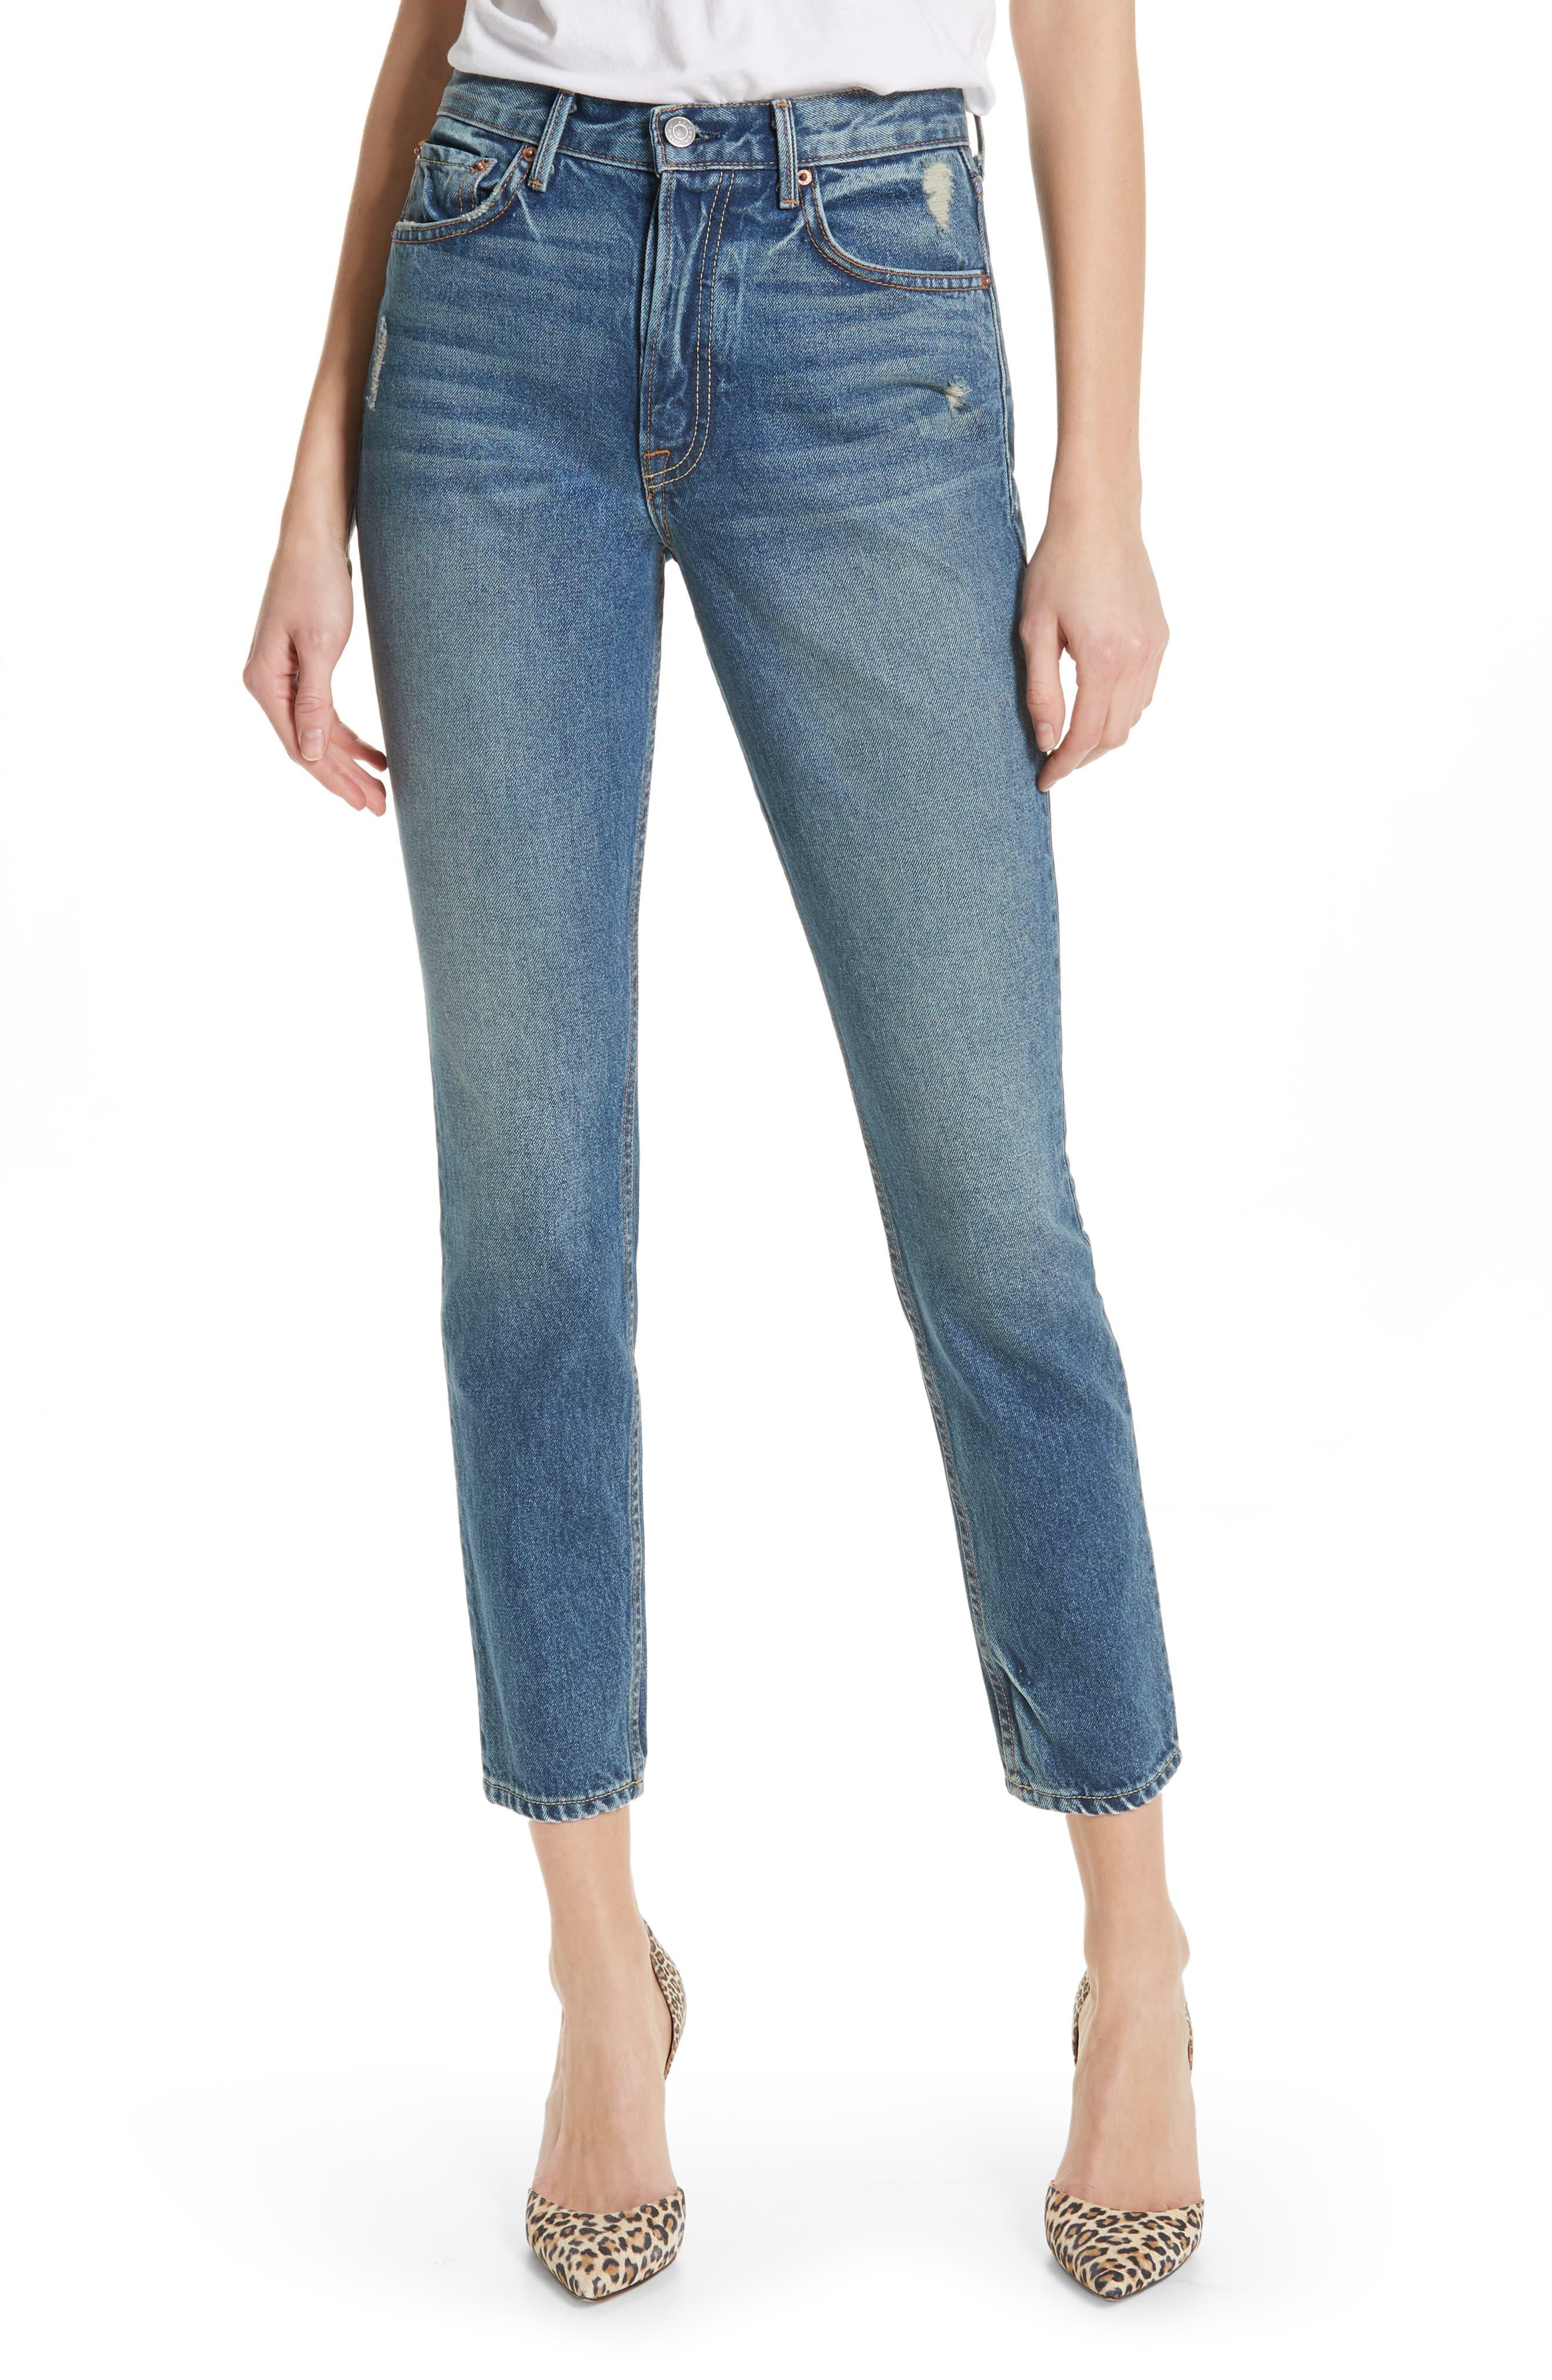 GRLFRND Denim Karolina High Waist Skinny Jeans in Blue - Lyst